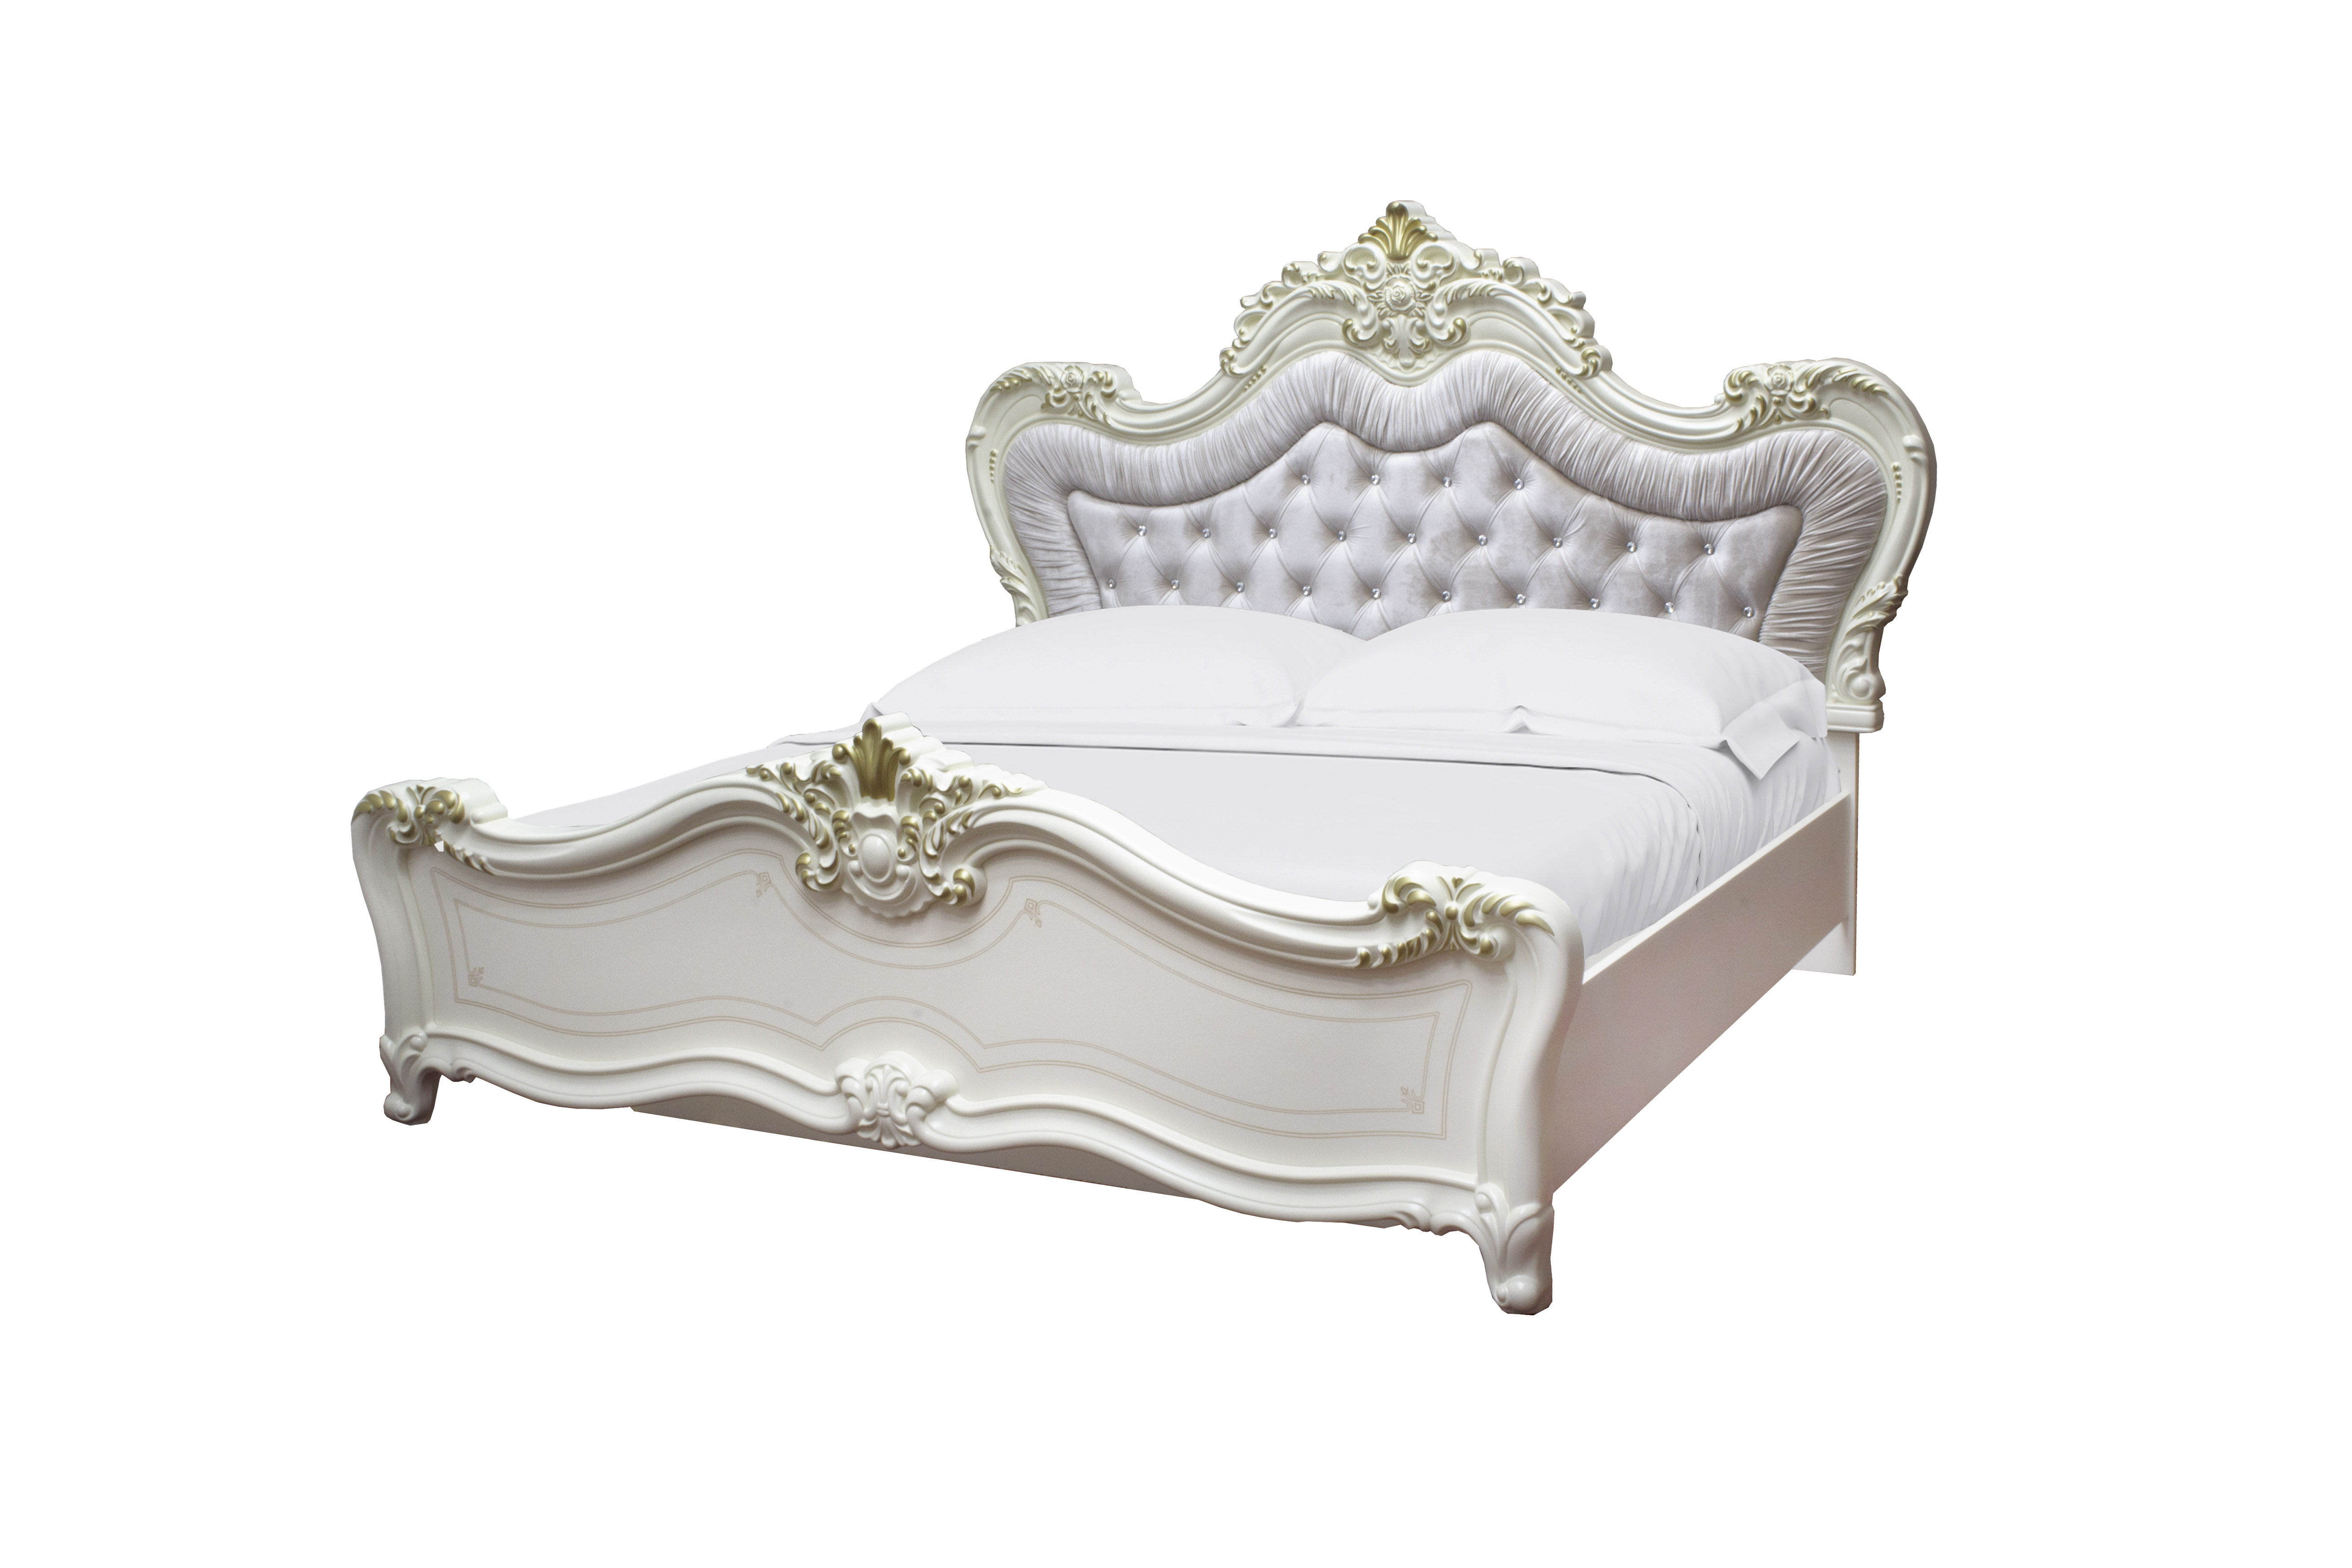 Cremefarbenes Barock-Bett mit barockem Kopfteil.